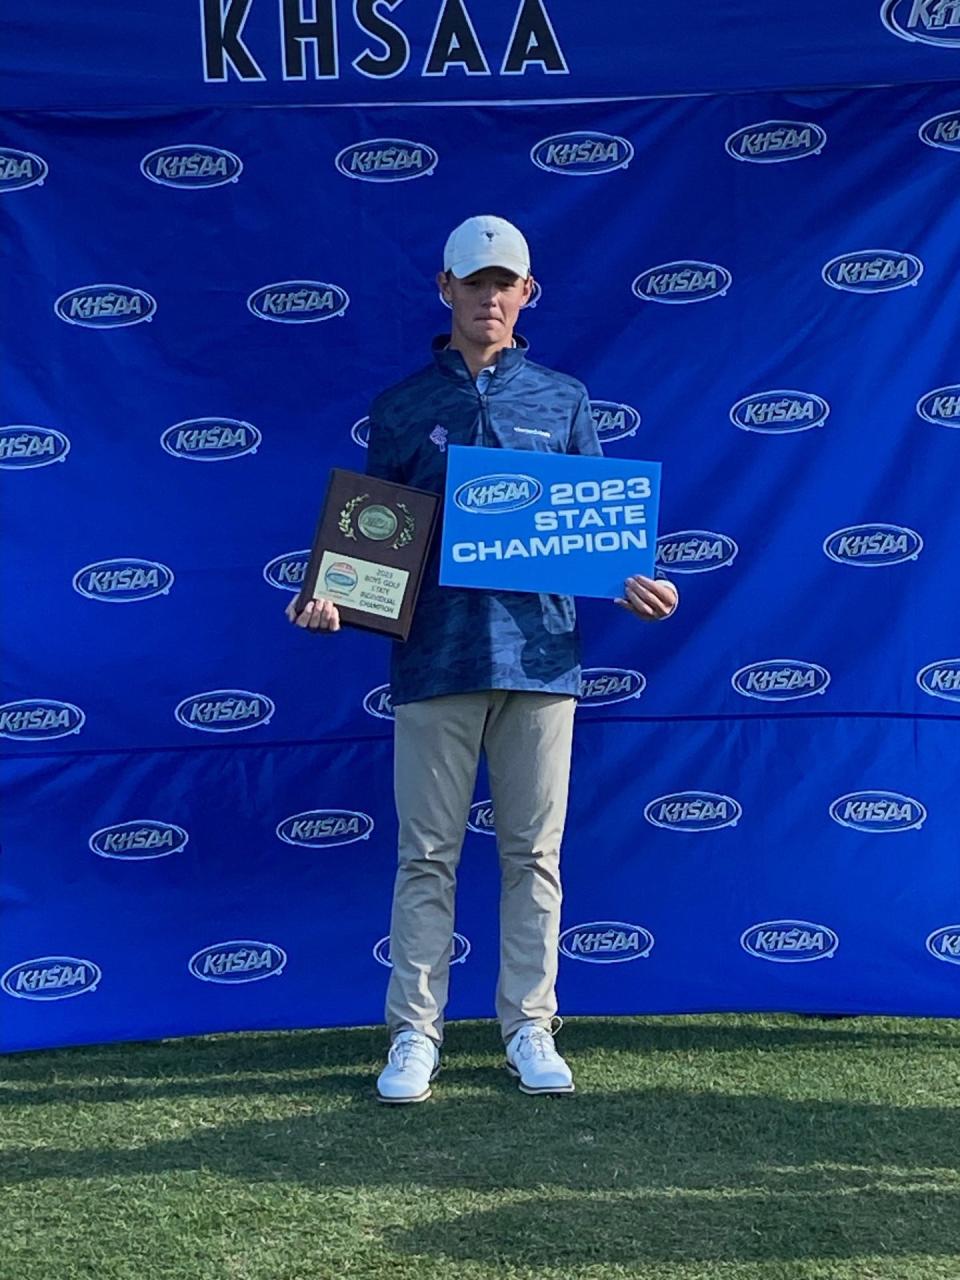 Christian Academy senior Brady Smith won the KHSAA boys golf state championship at Bowling Green Country Club.